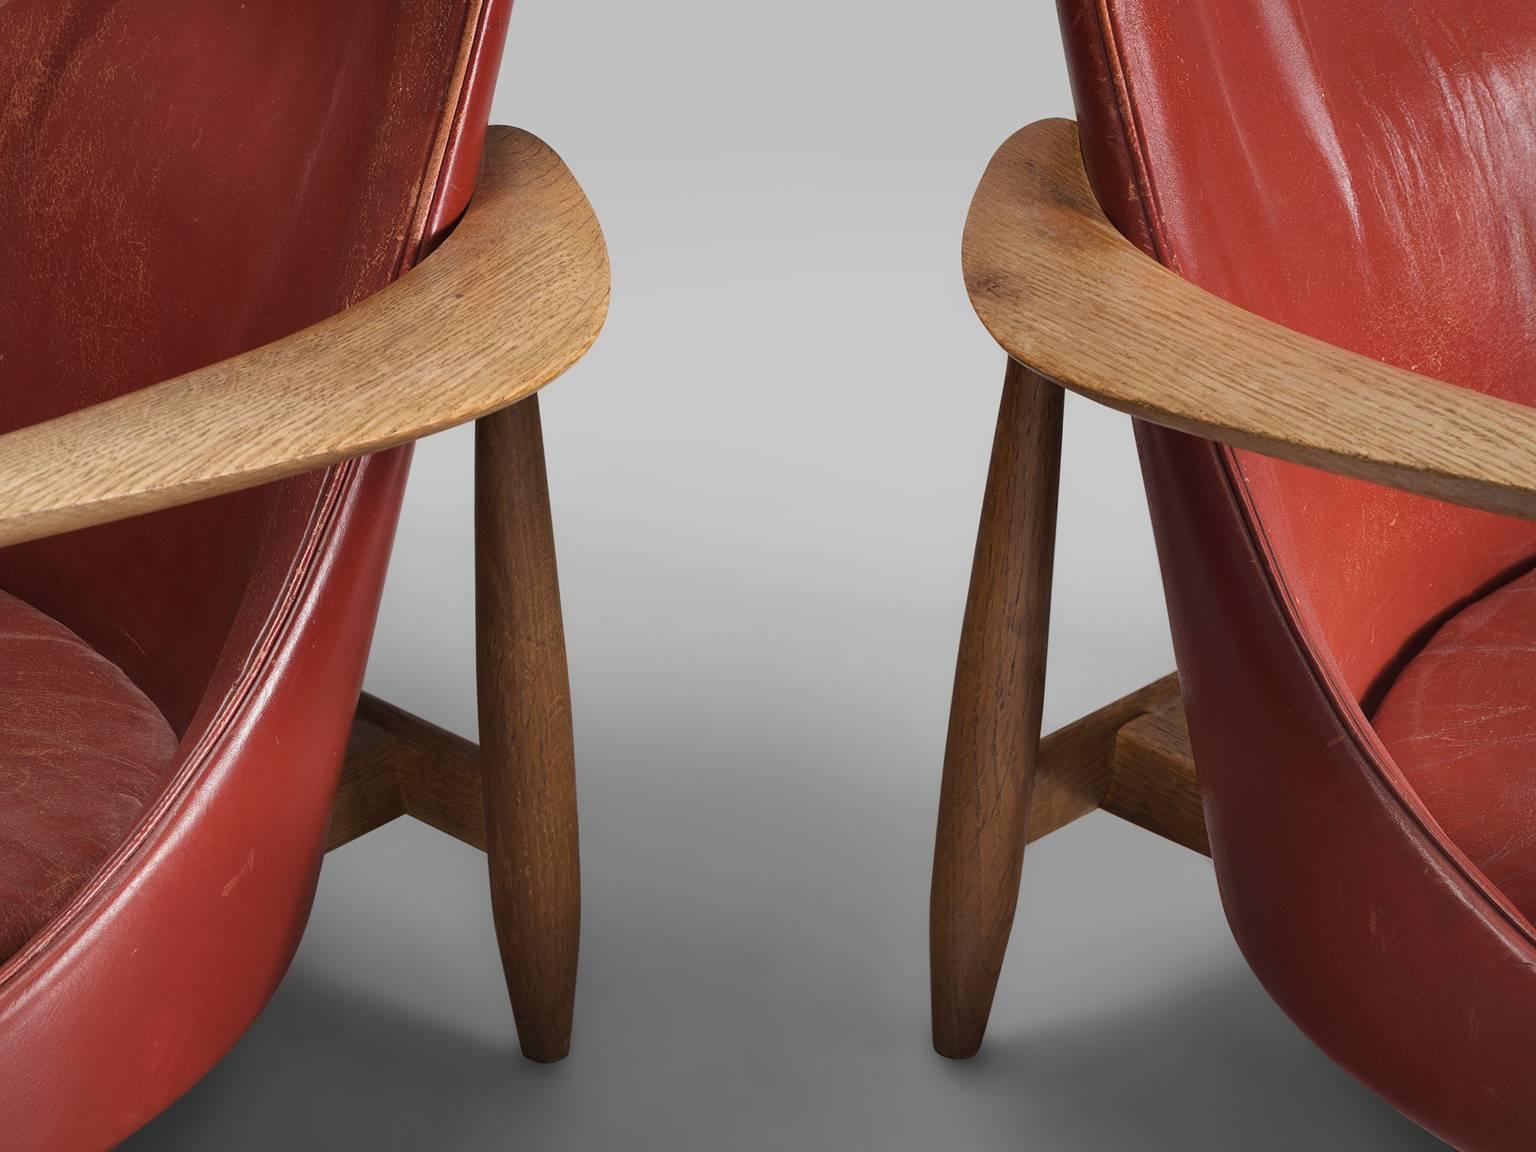 Ib Kofod-Larsen 'Elizabeth' Chairs in Original Aged Leather 1